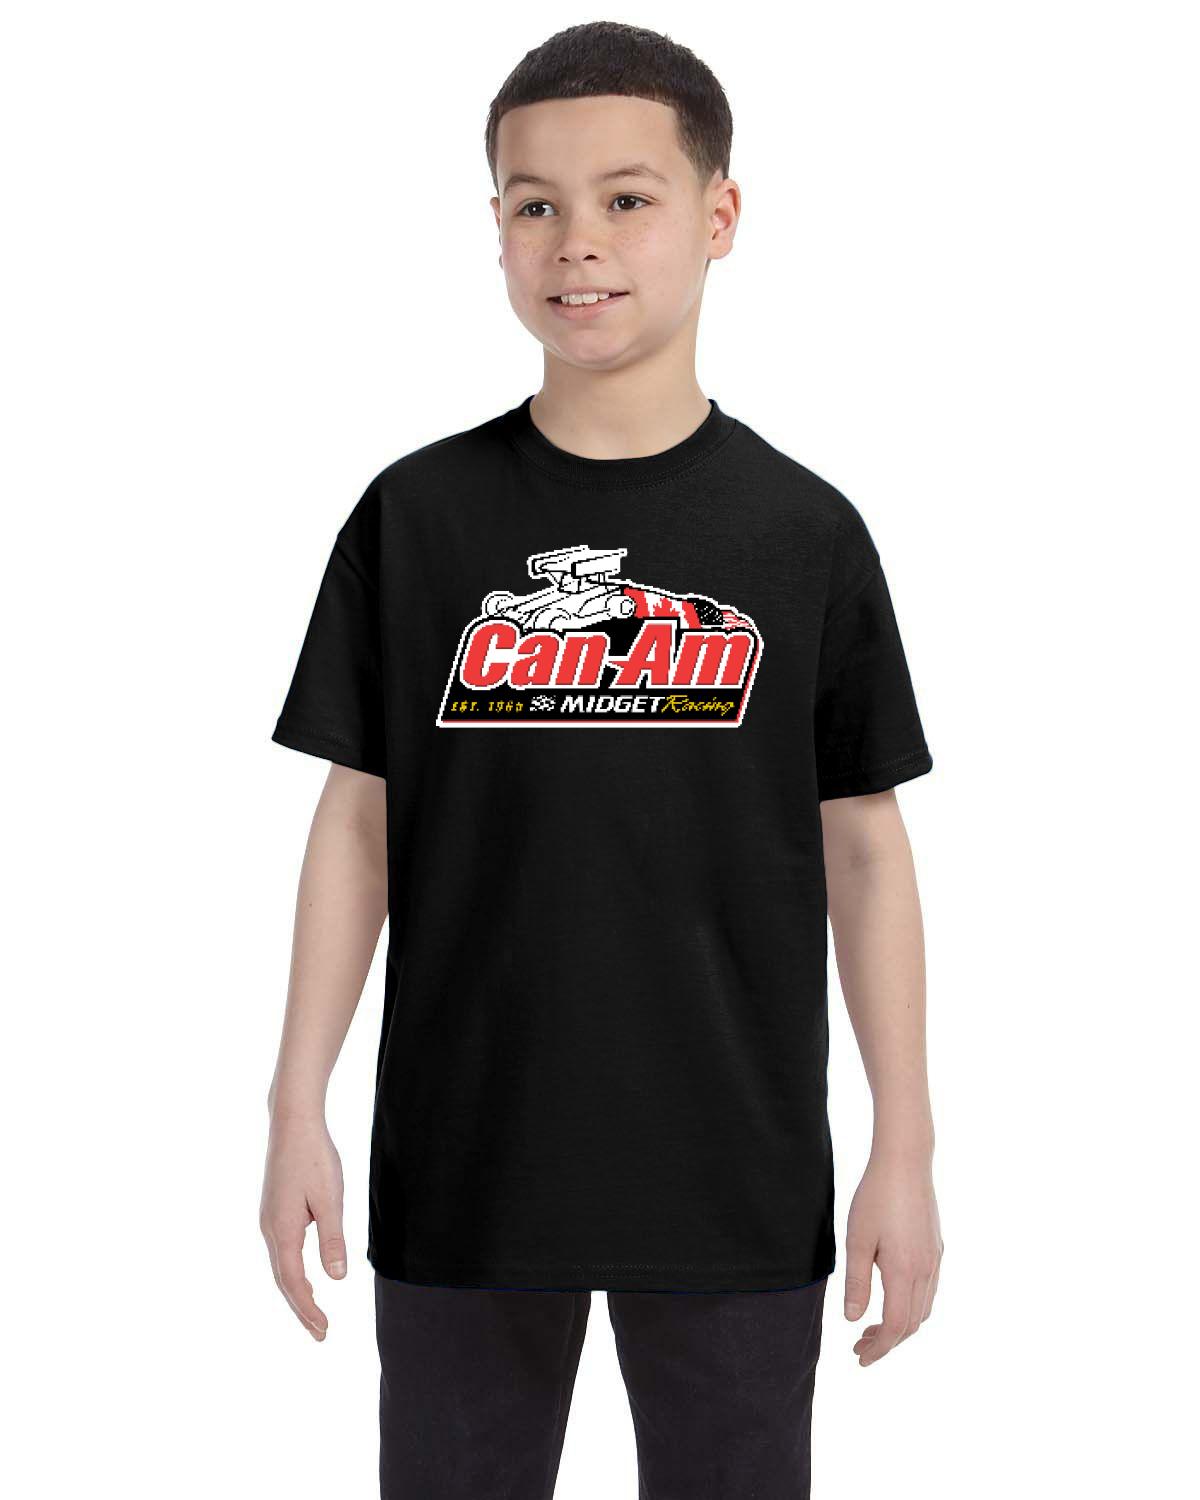 Can Am Midget Racing Kid's T-Shirt